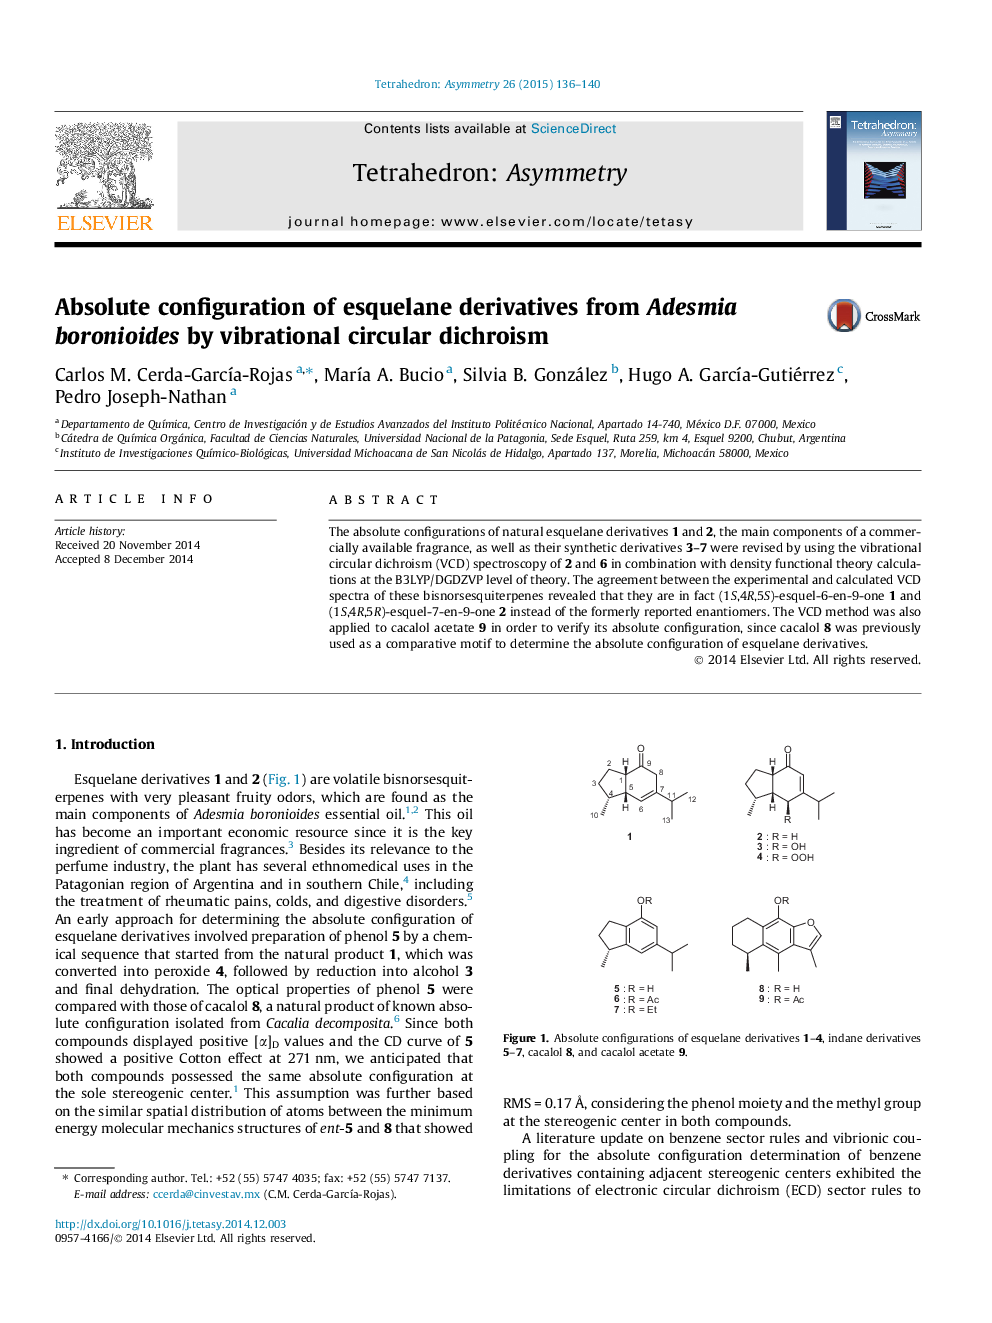 Absolute configuration of esquelane derivatives from Adesmia boronioides by vibrational circular dichroism